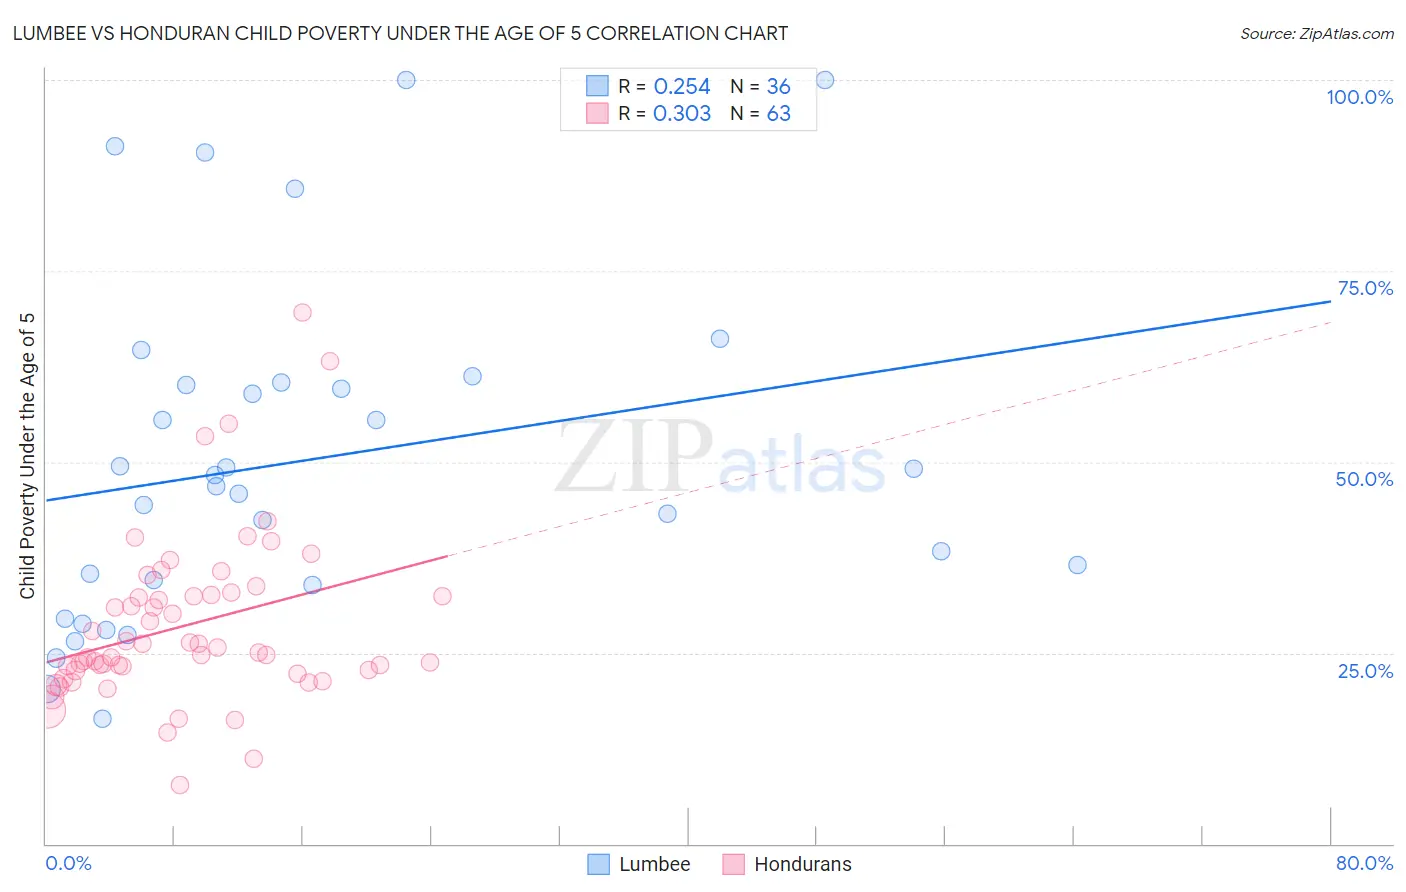 Lumbee vs Honduran Child Poverty Under the Age of 5